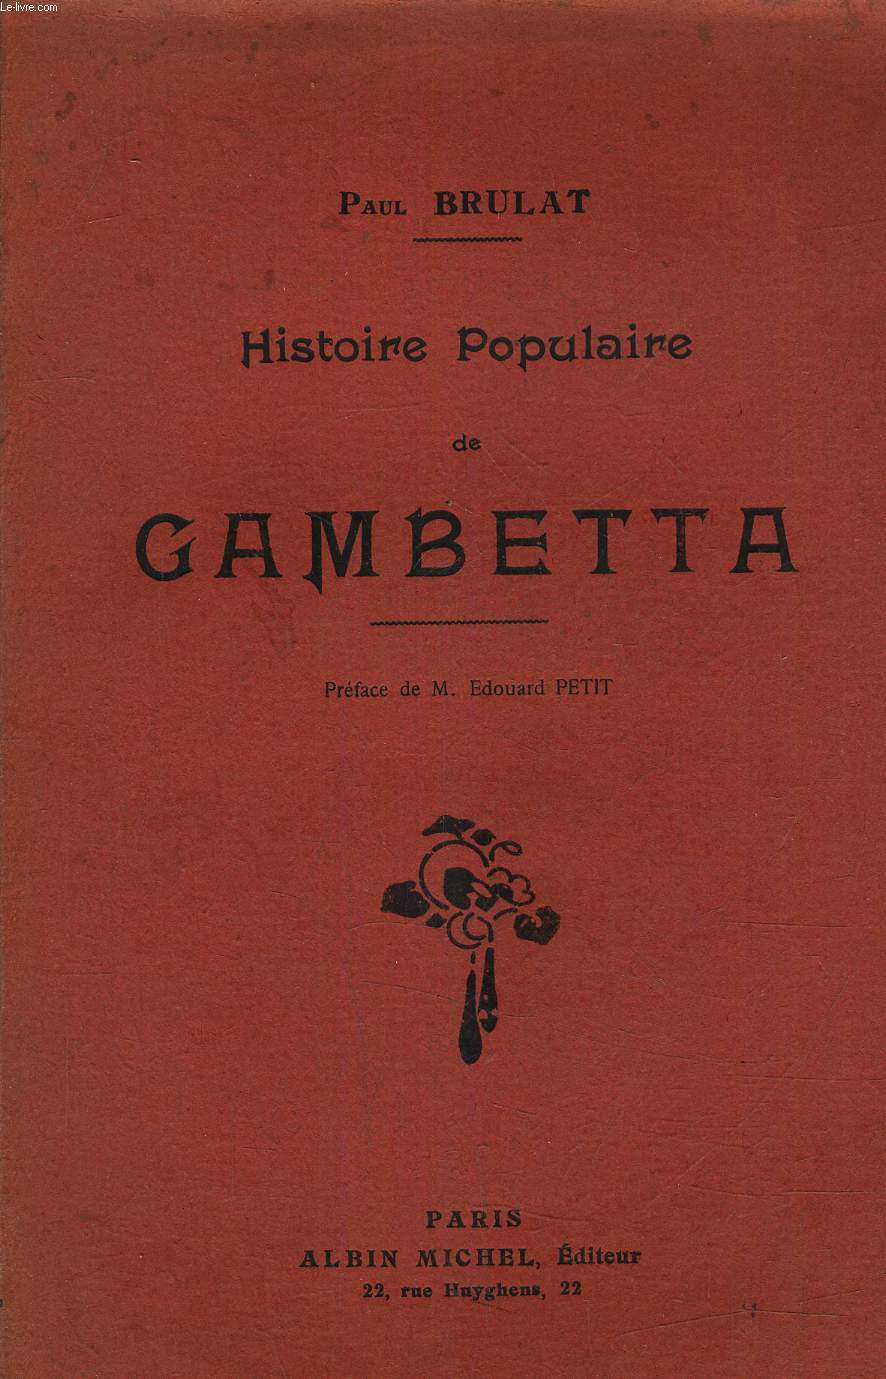 HISTOIRE POPULAIRE DE LOUIS GAMBETTA.